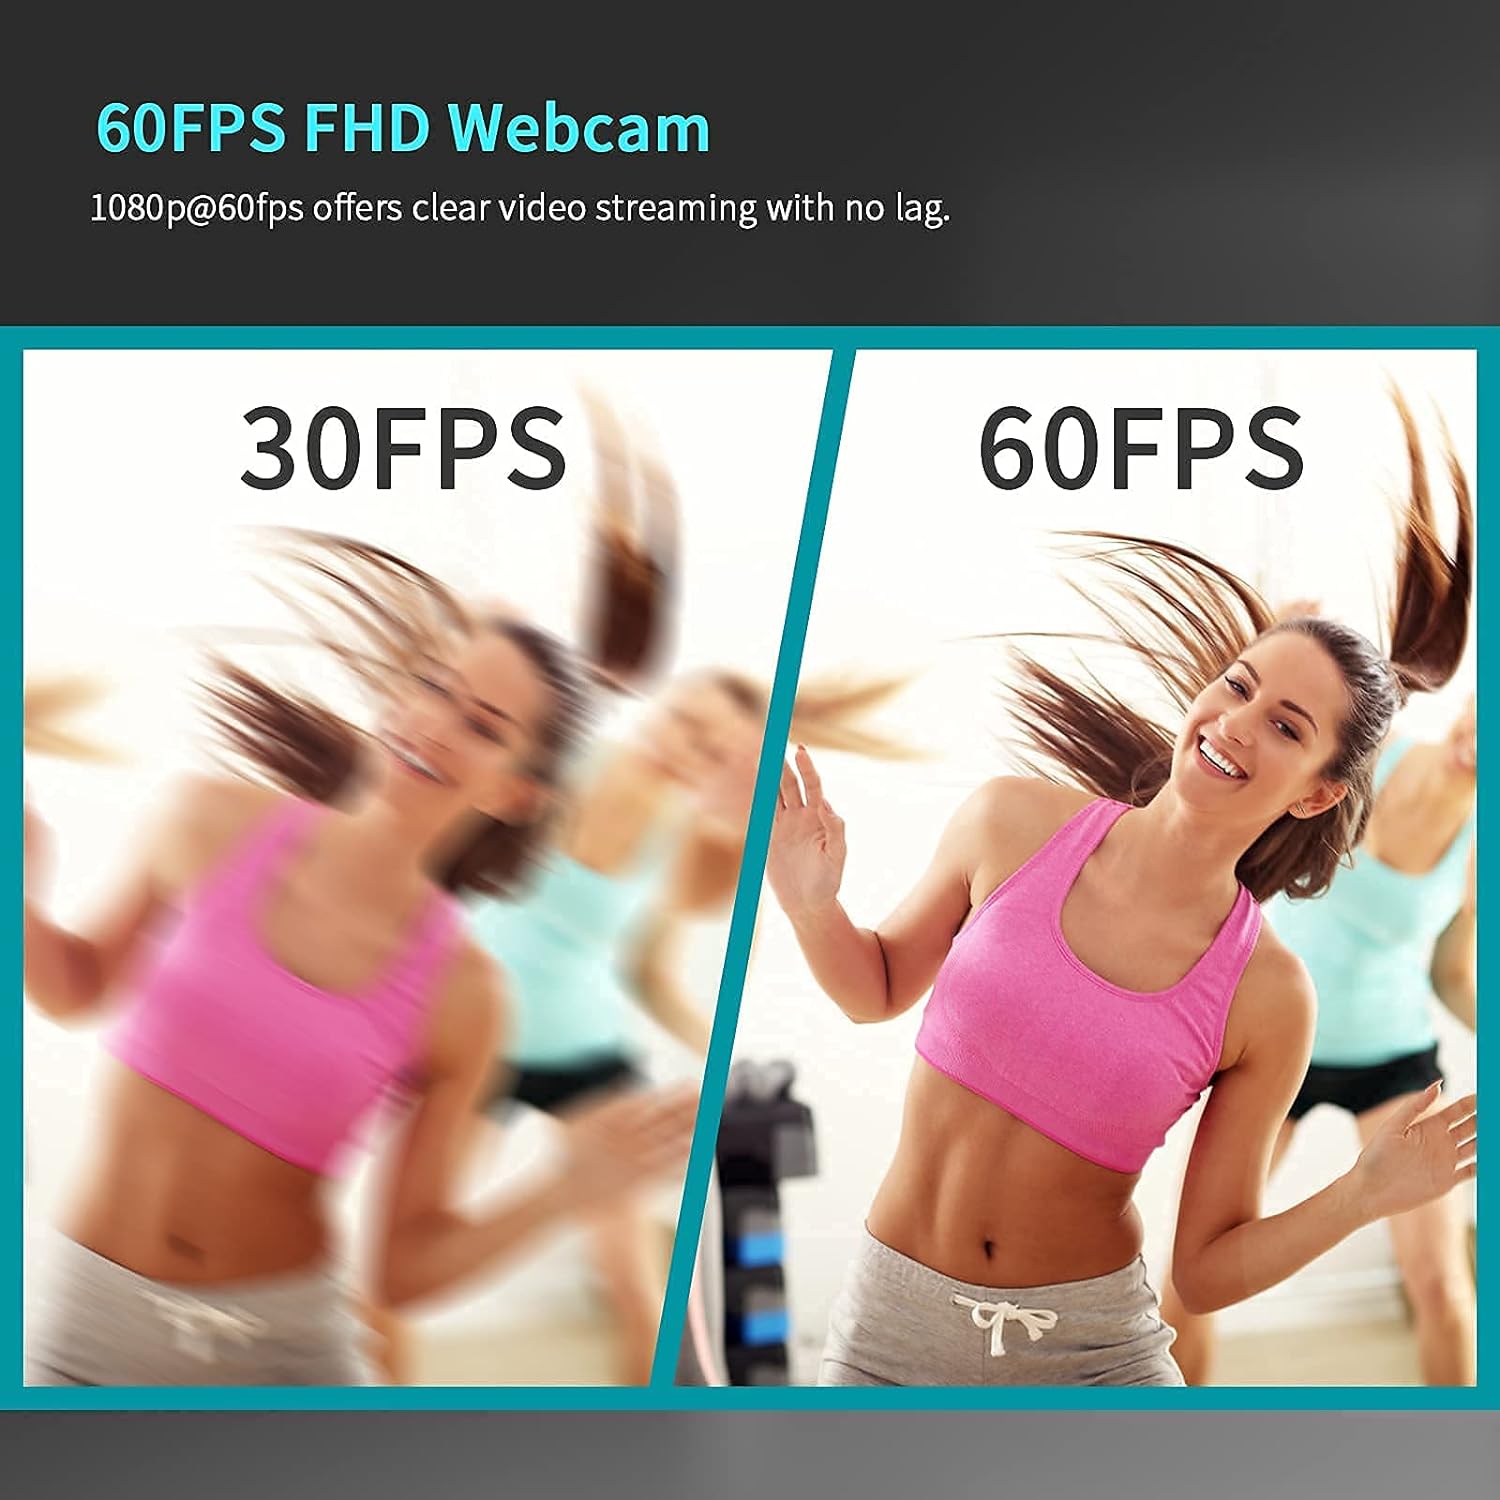 60FPS AutoFocus ePTZ Webcam, NexiGo N620E with 2X Digital Zoom, Ring Light & Privacy Cover, [Software Included], 1080P FHD Streaming Web Camera, Dual Stereo Mics, for Zoom Skype Teams